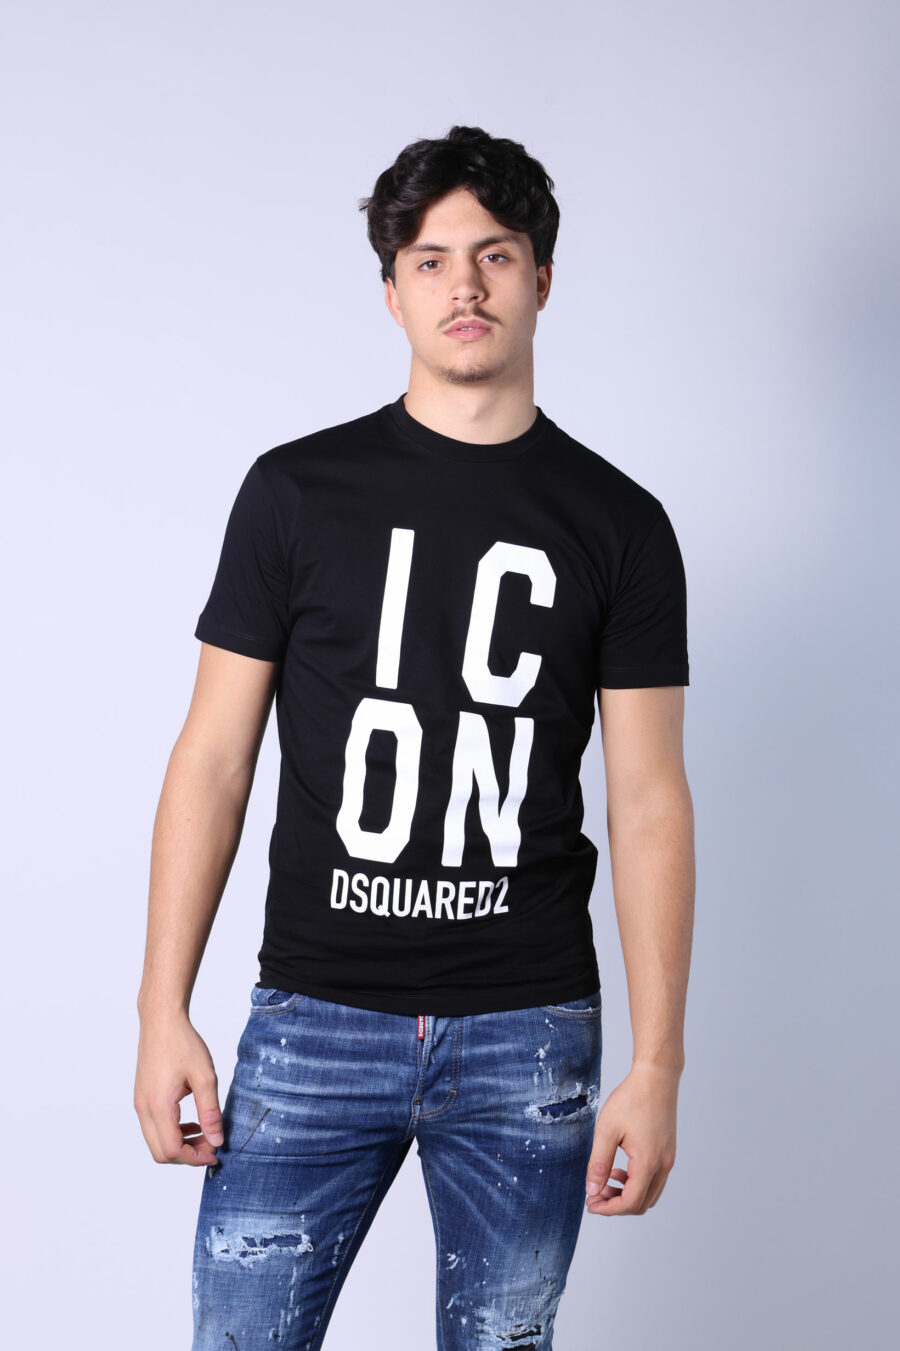 Camiseta negra con maxilogo "icon" cuadrado - Untitled Catalog 05283